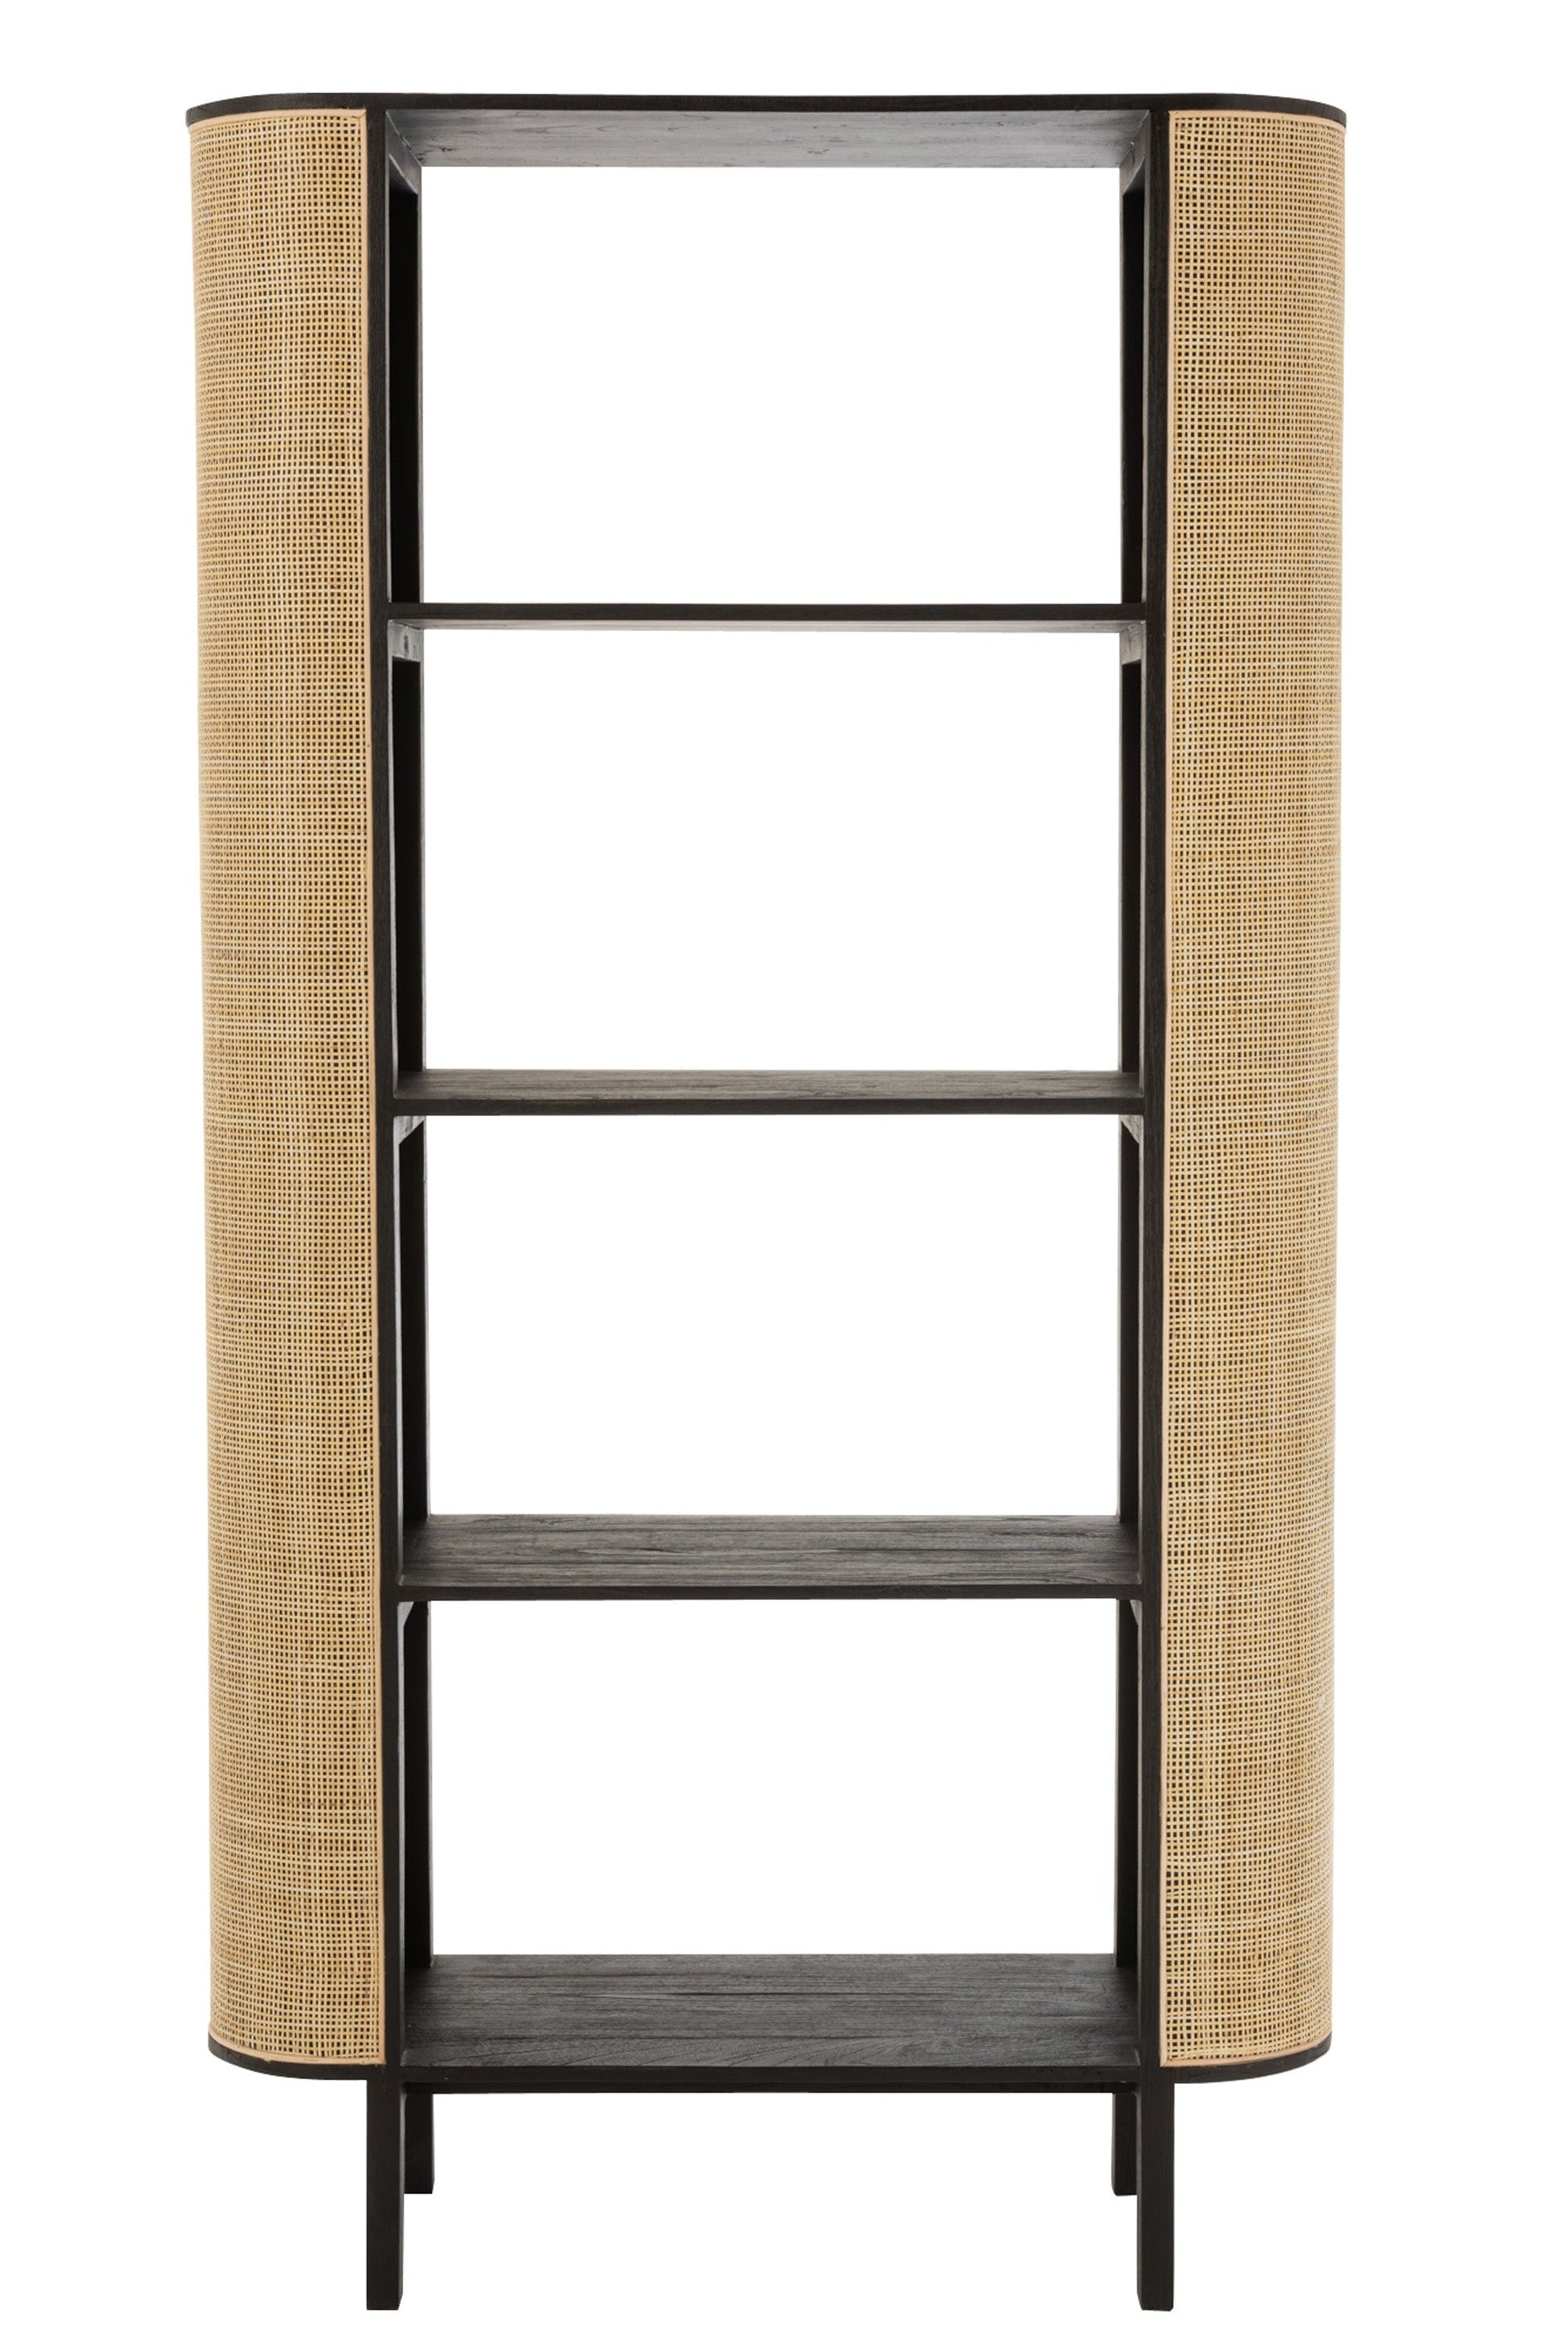 Wood Cabinet W/Shelves